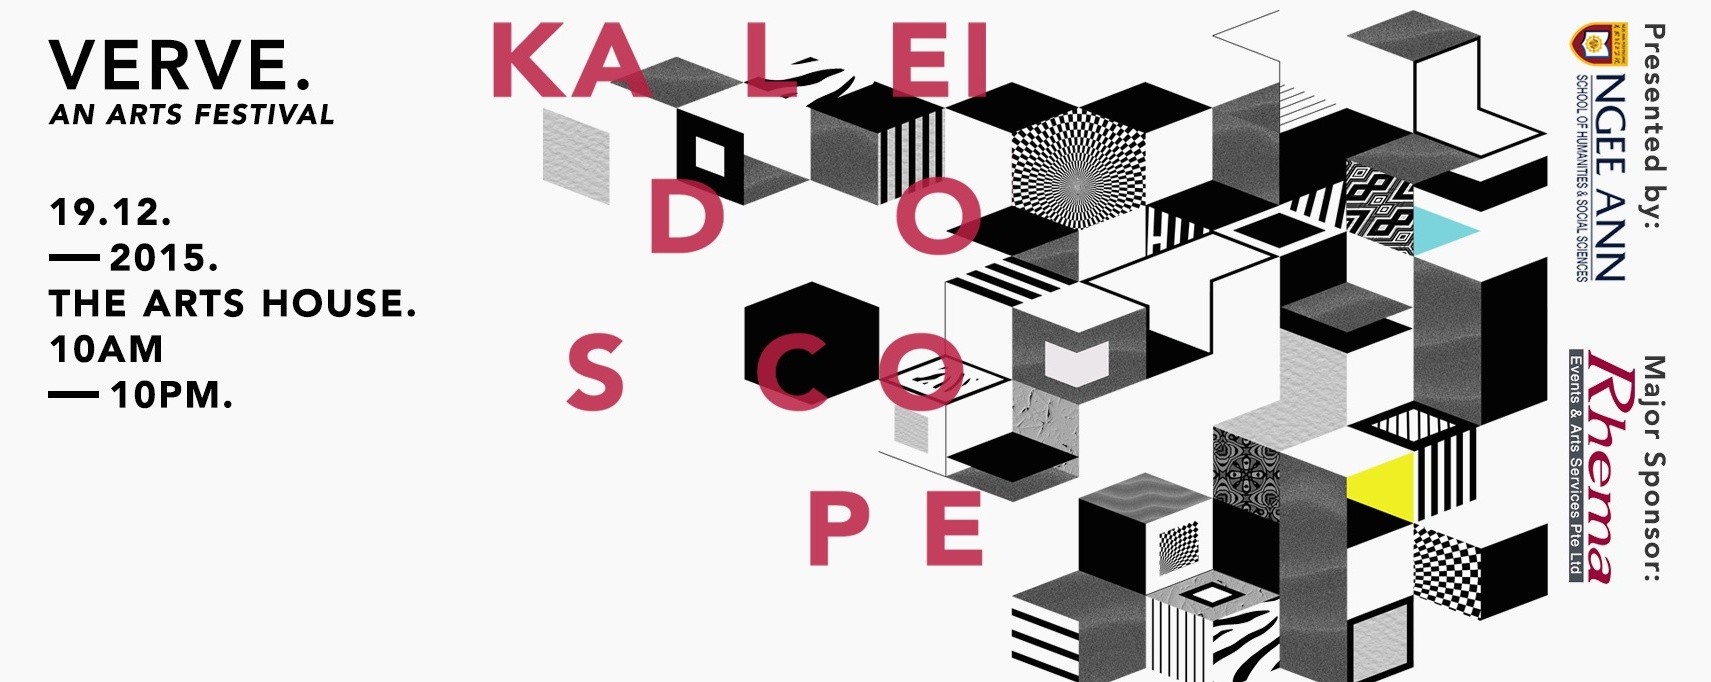 Verve Arts Festival '15: Kaleidoscope